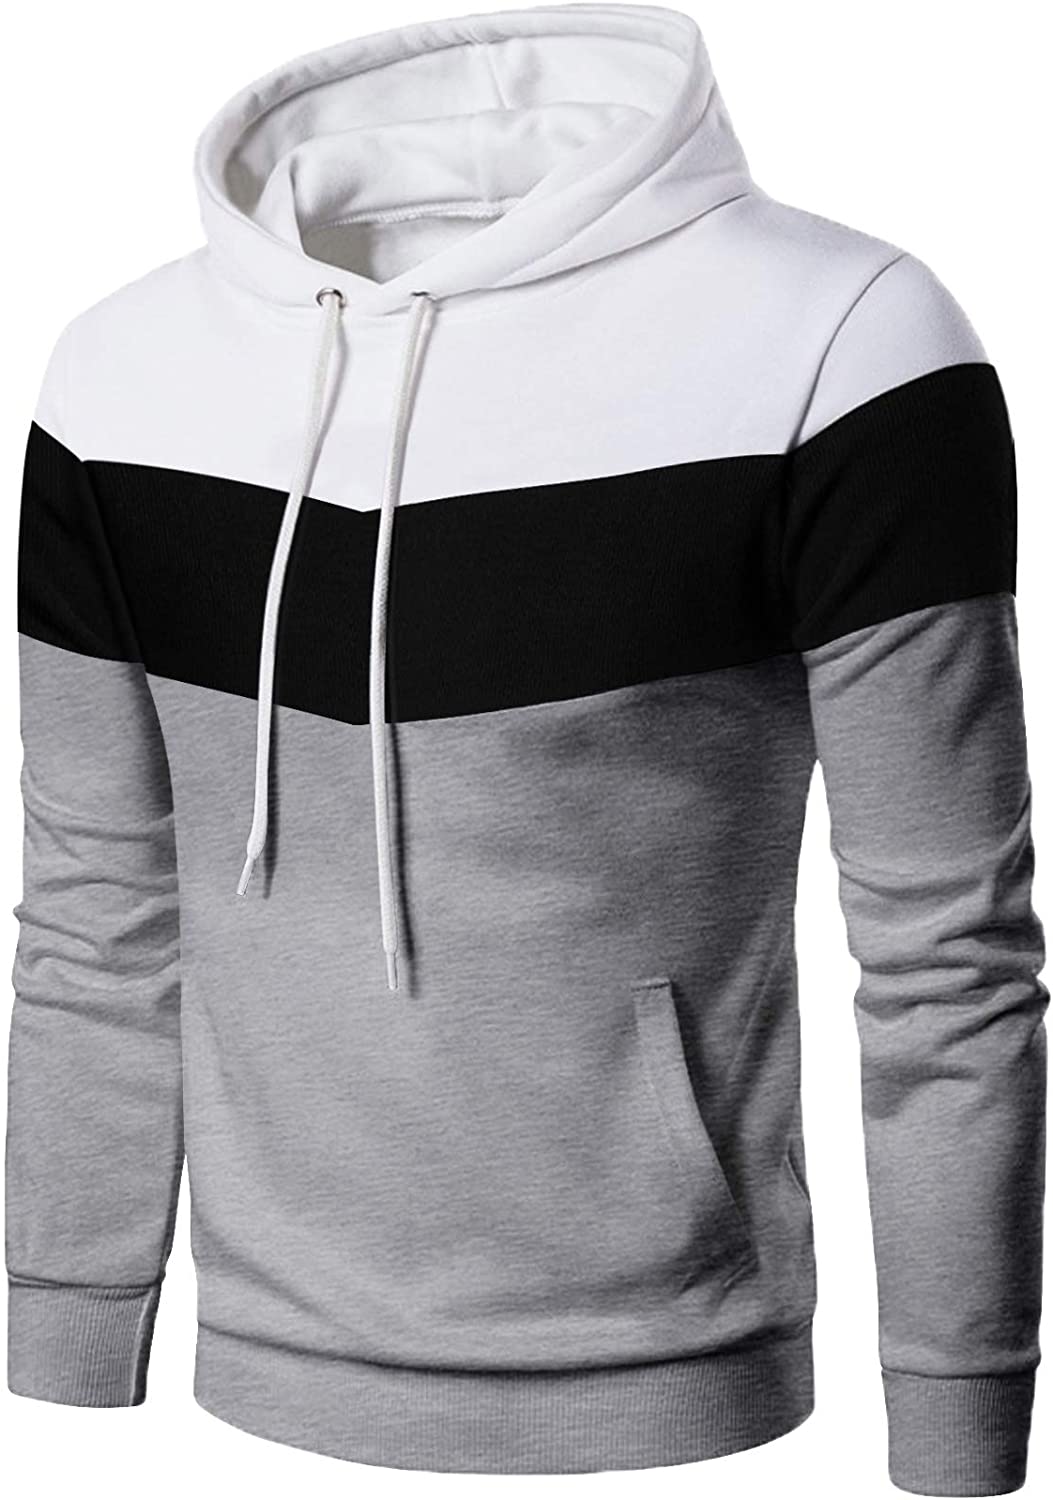 EKLENTSON Mens Sweatshirt Casual Stripe Color Sports Hoodies Pullover Outwear